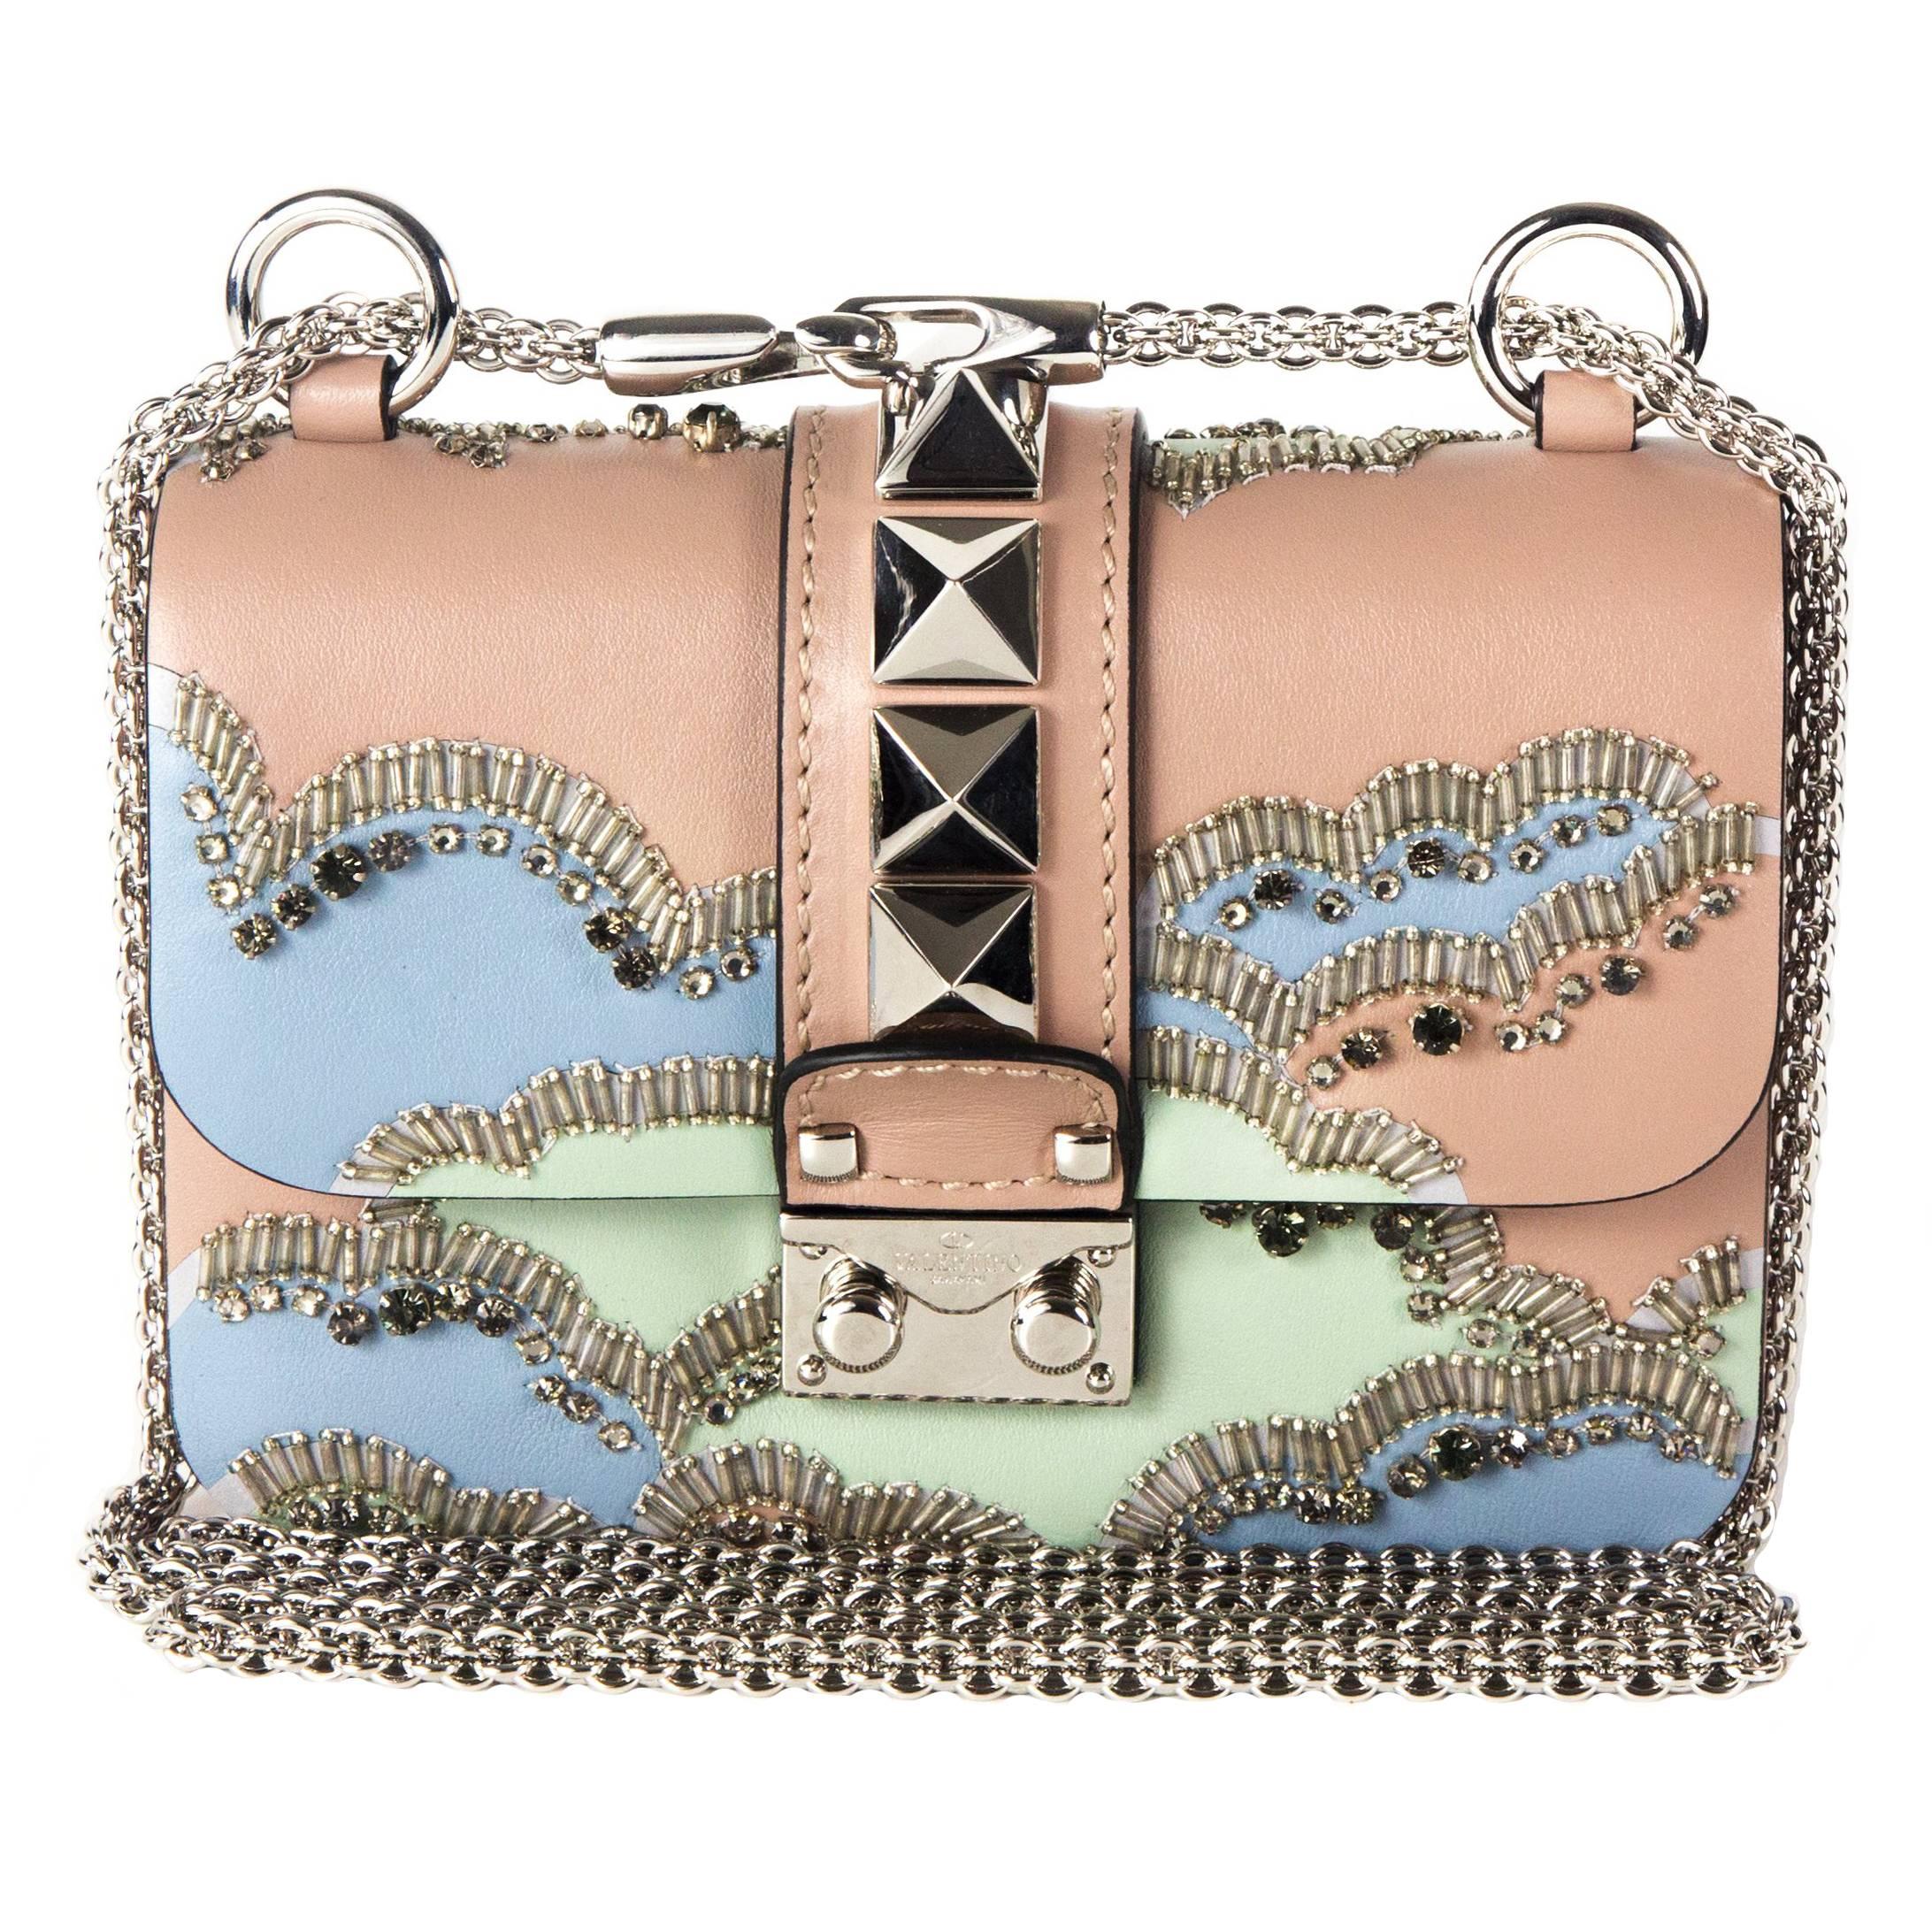 Valentino Bag - New - Pink Glam Lock Crystal Bead Rockstud Studded Handbag Bag